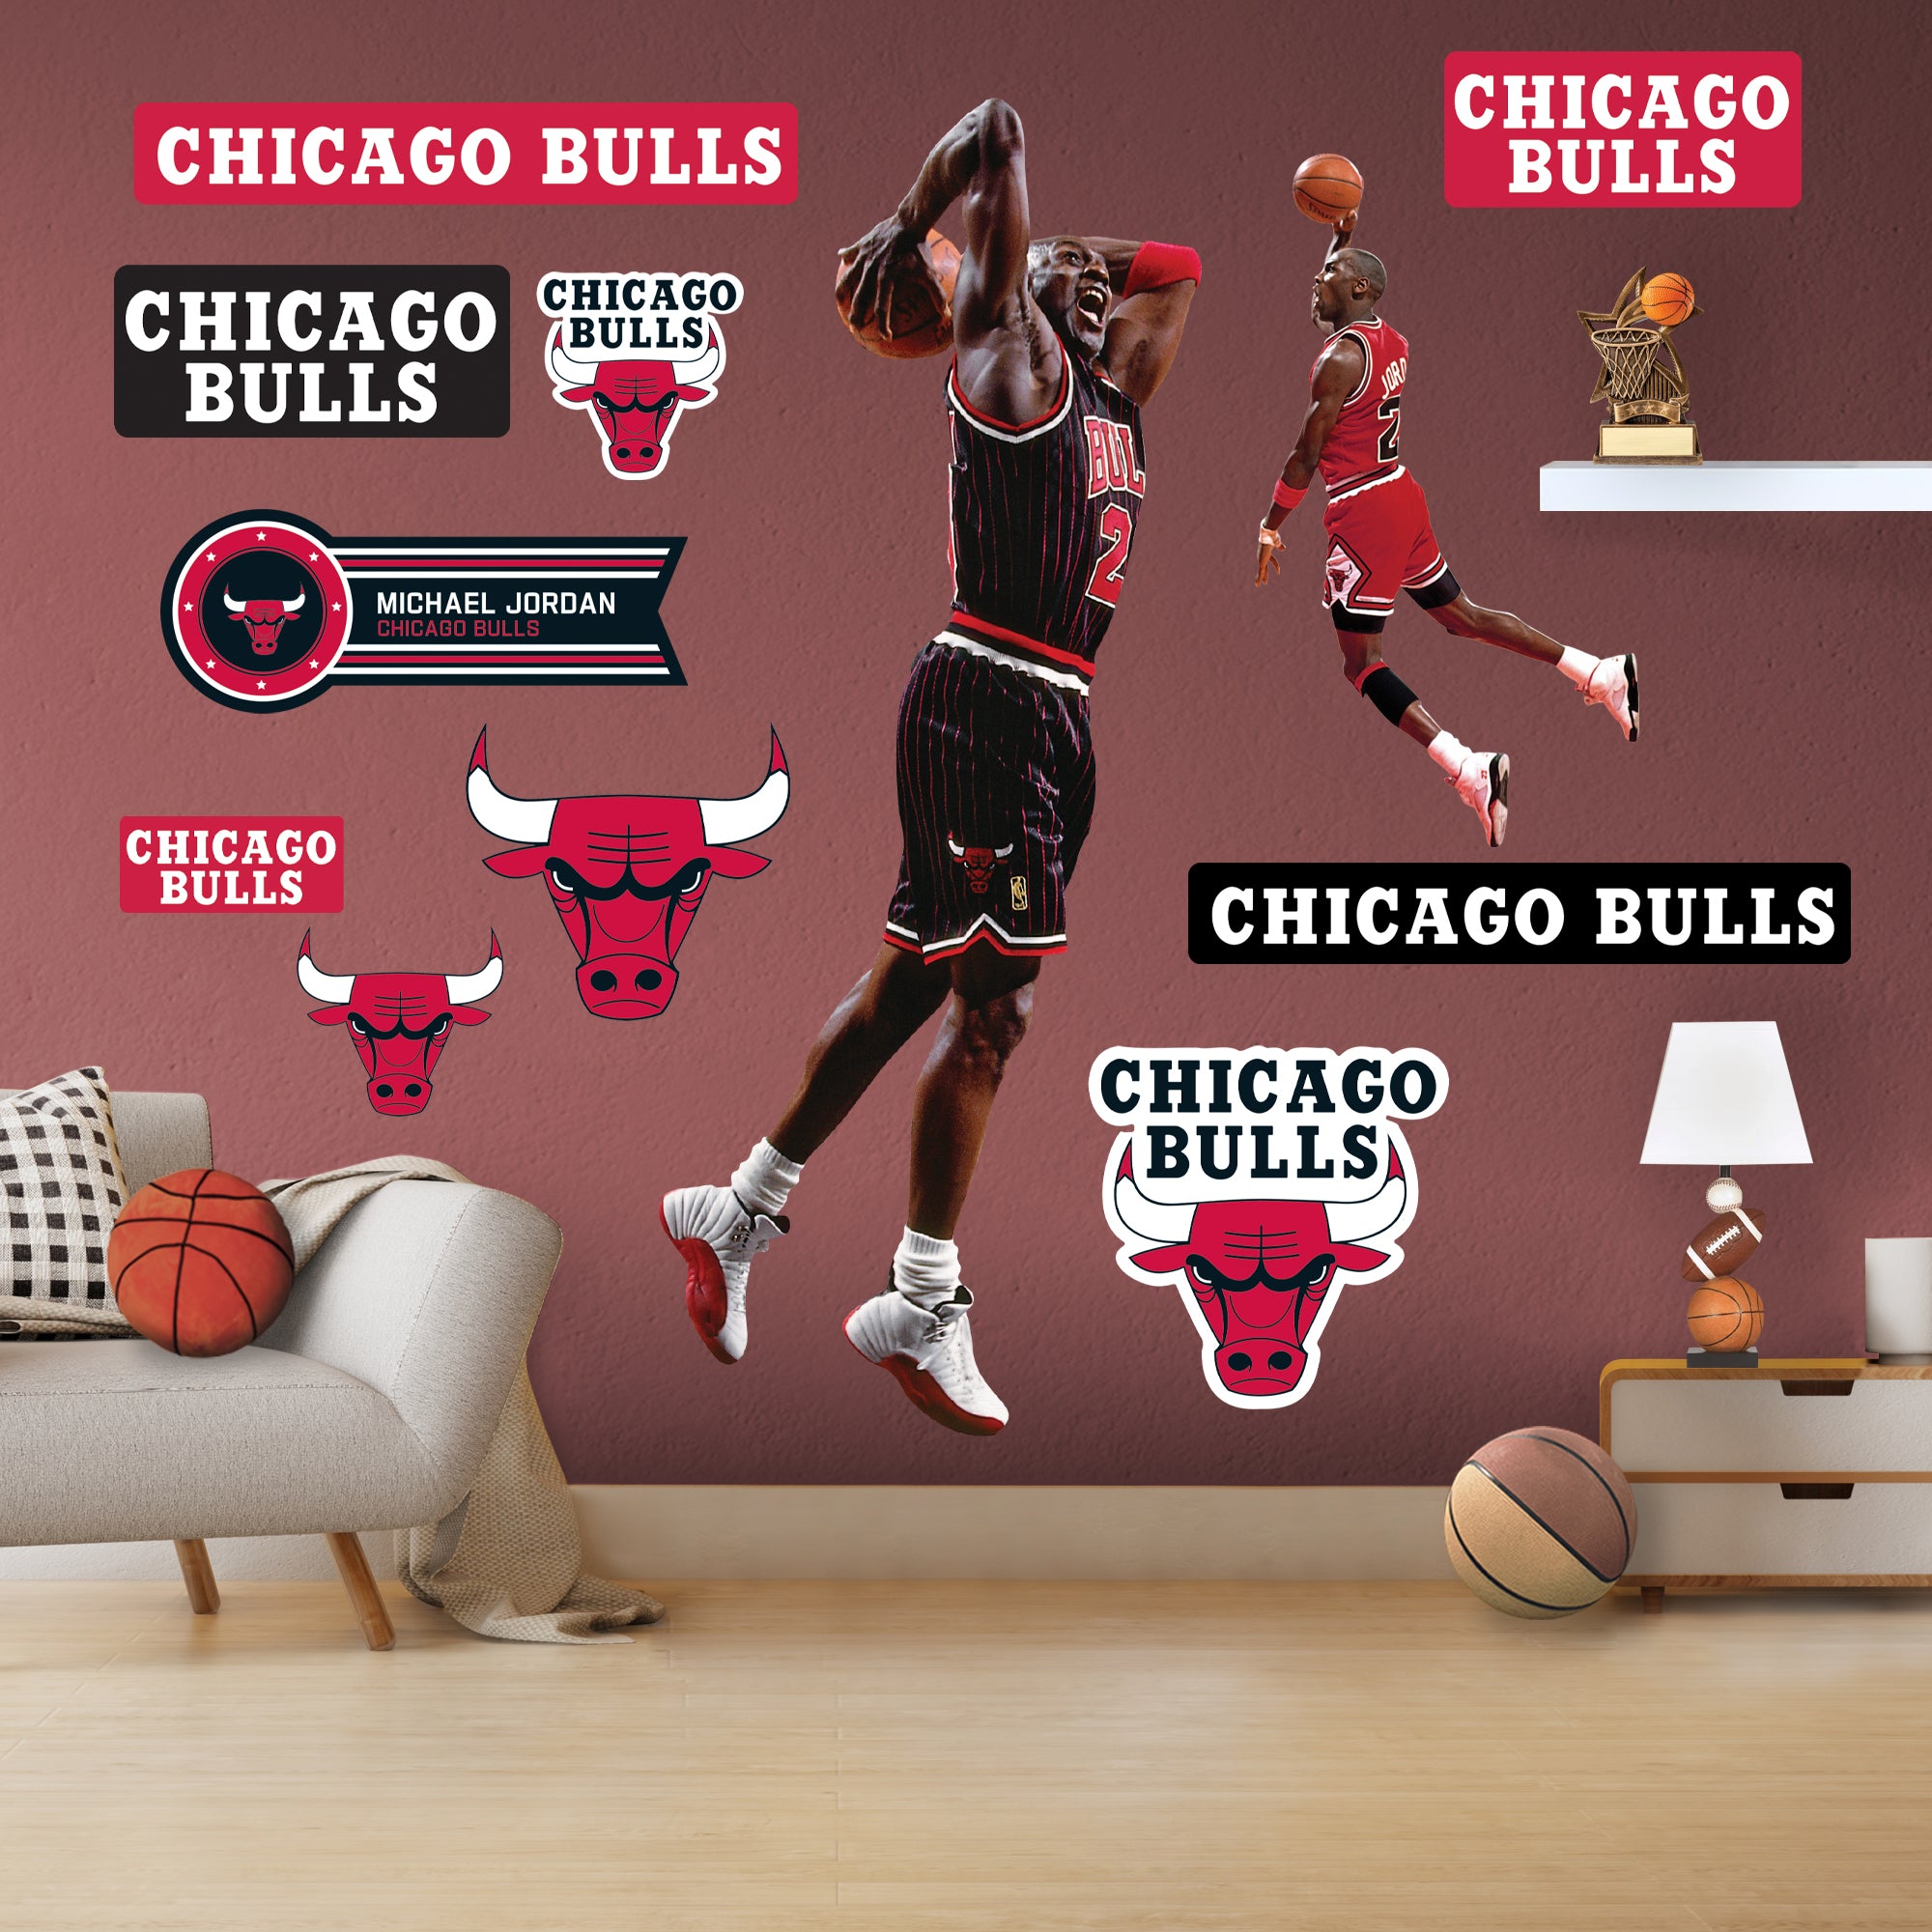 202223 NBA Season Chicago Bulls Offseason Recap And Season Preview   Fastbreak on FanNation